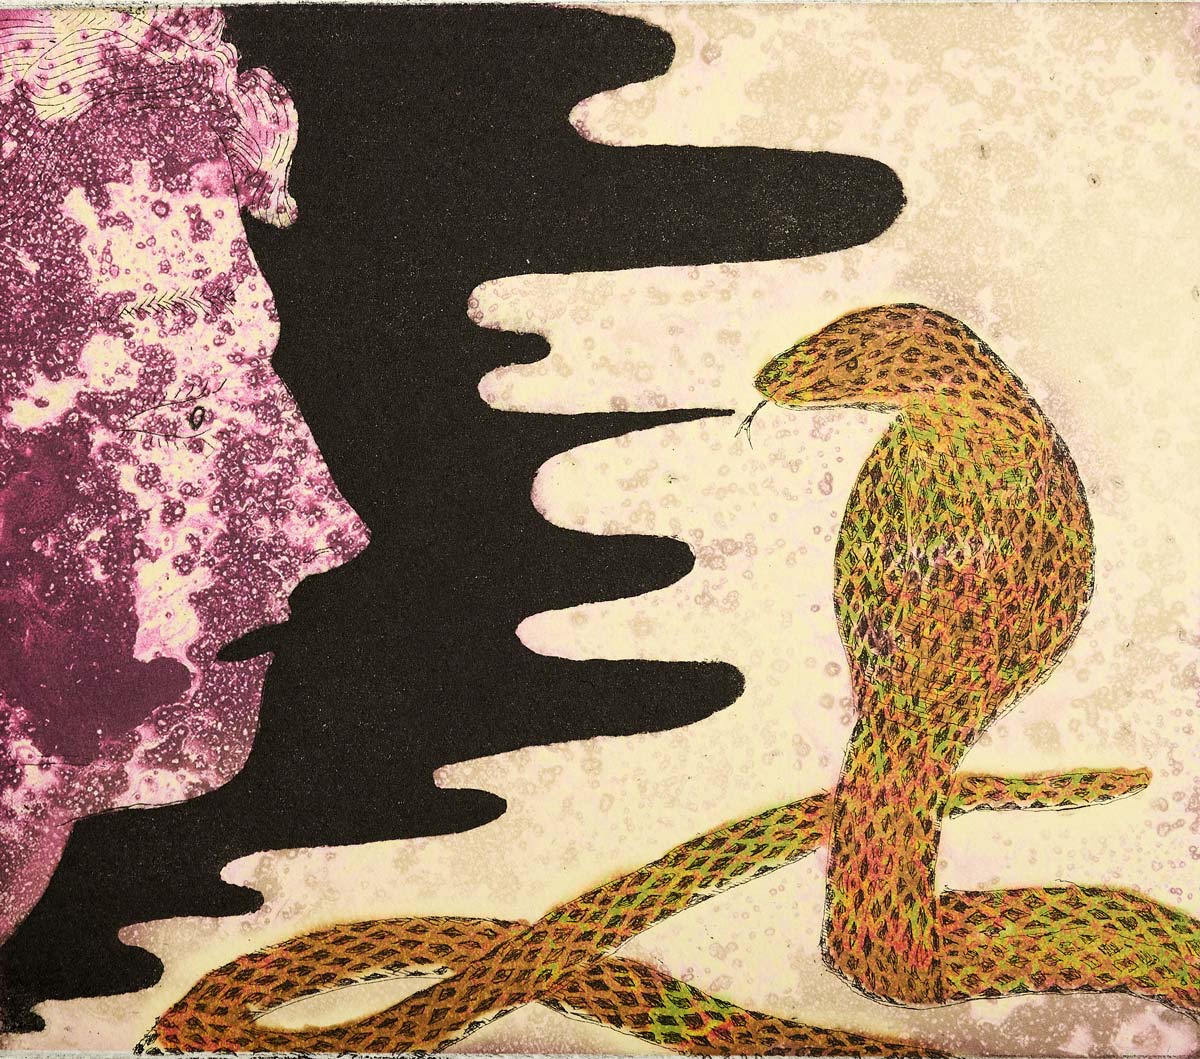 I Bite & Sting (Snake), 26 x 27 cm, Colour Etching, 2020